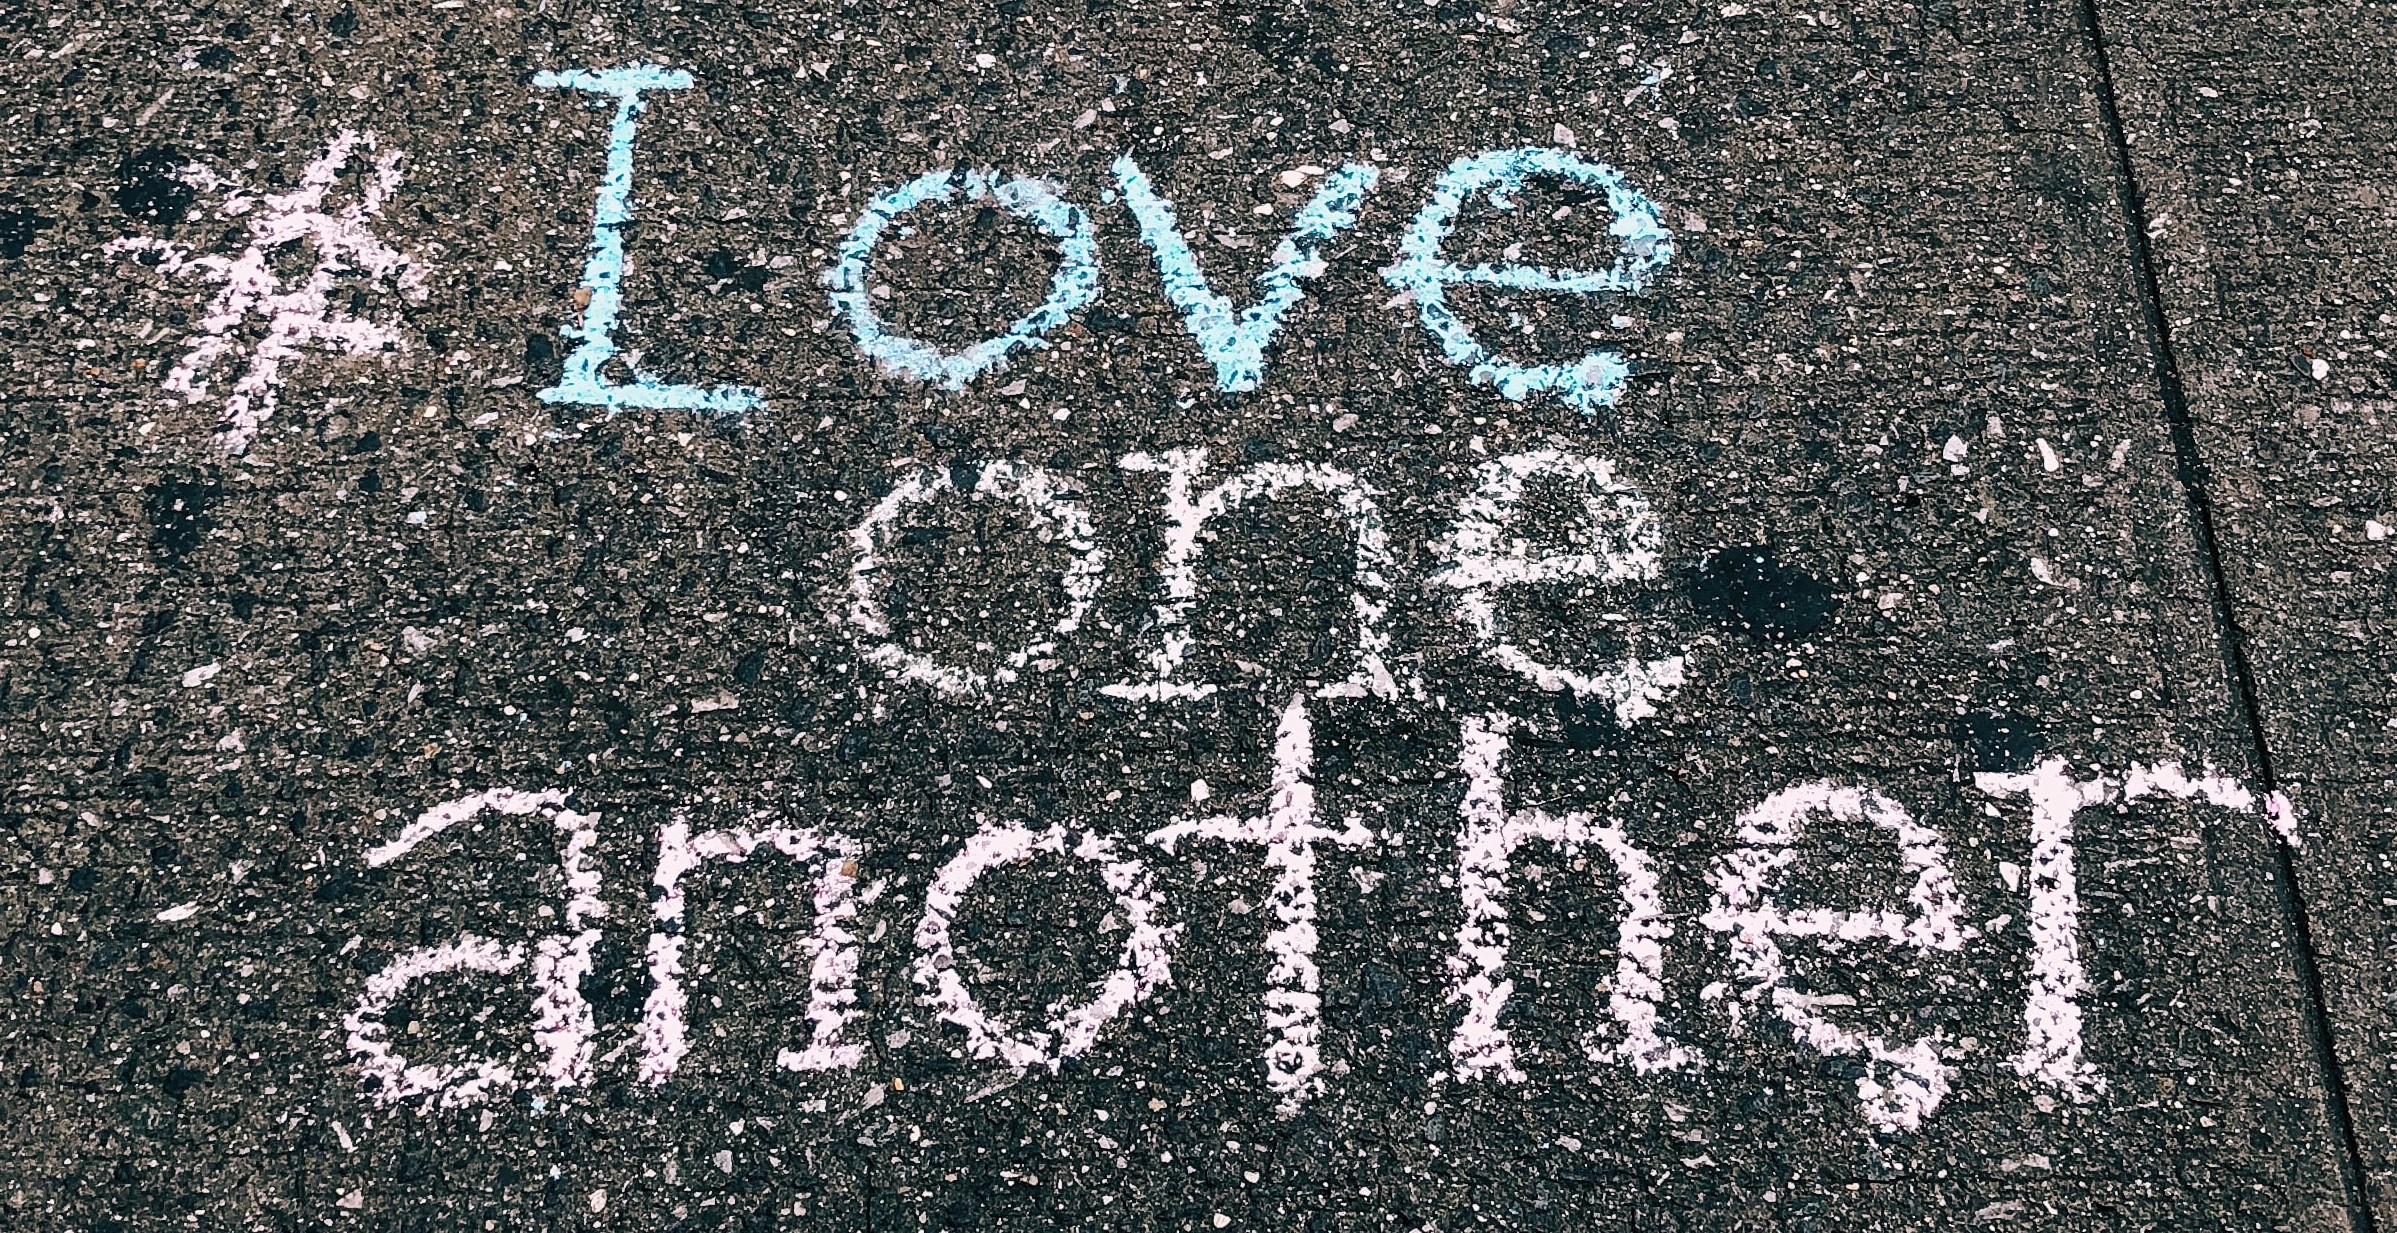 #Love one another written in chalk on a sidewalk